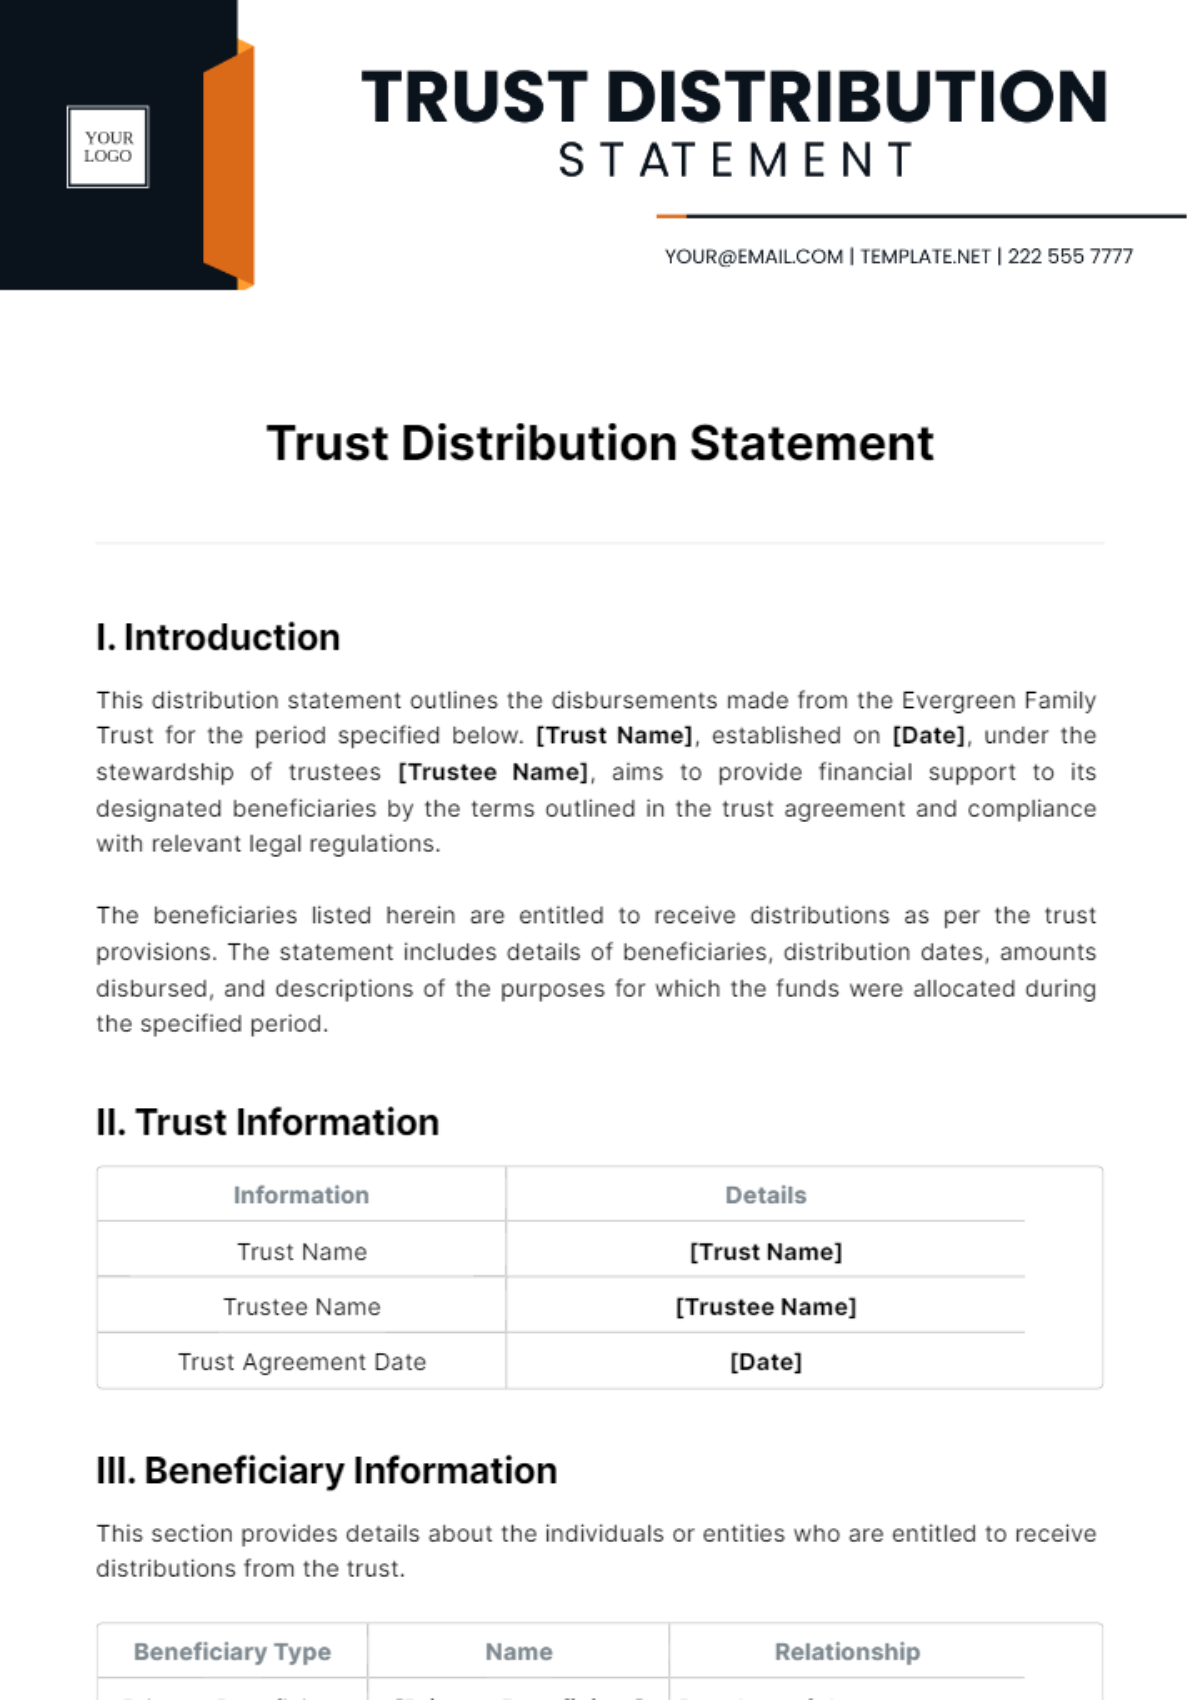 Trust Distribution Statement Template